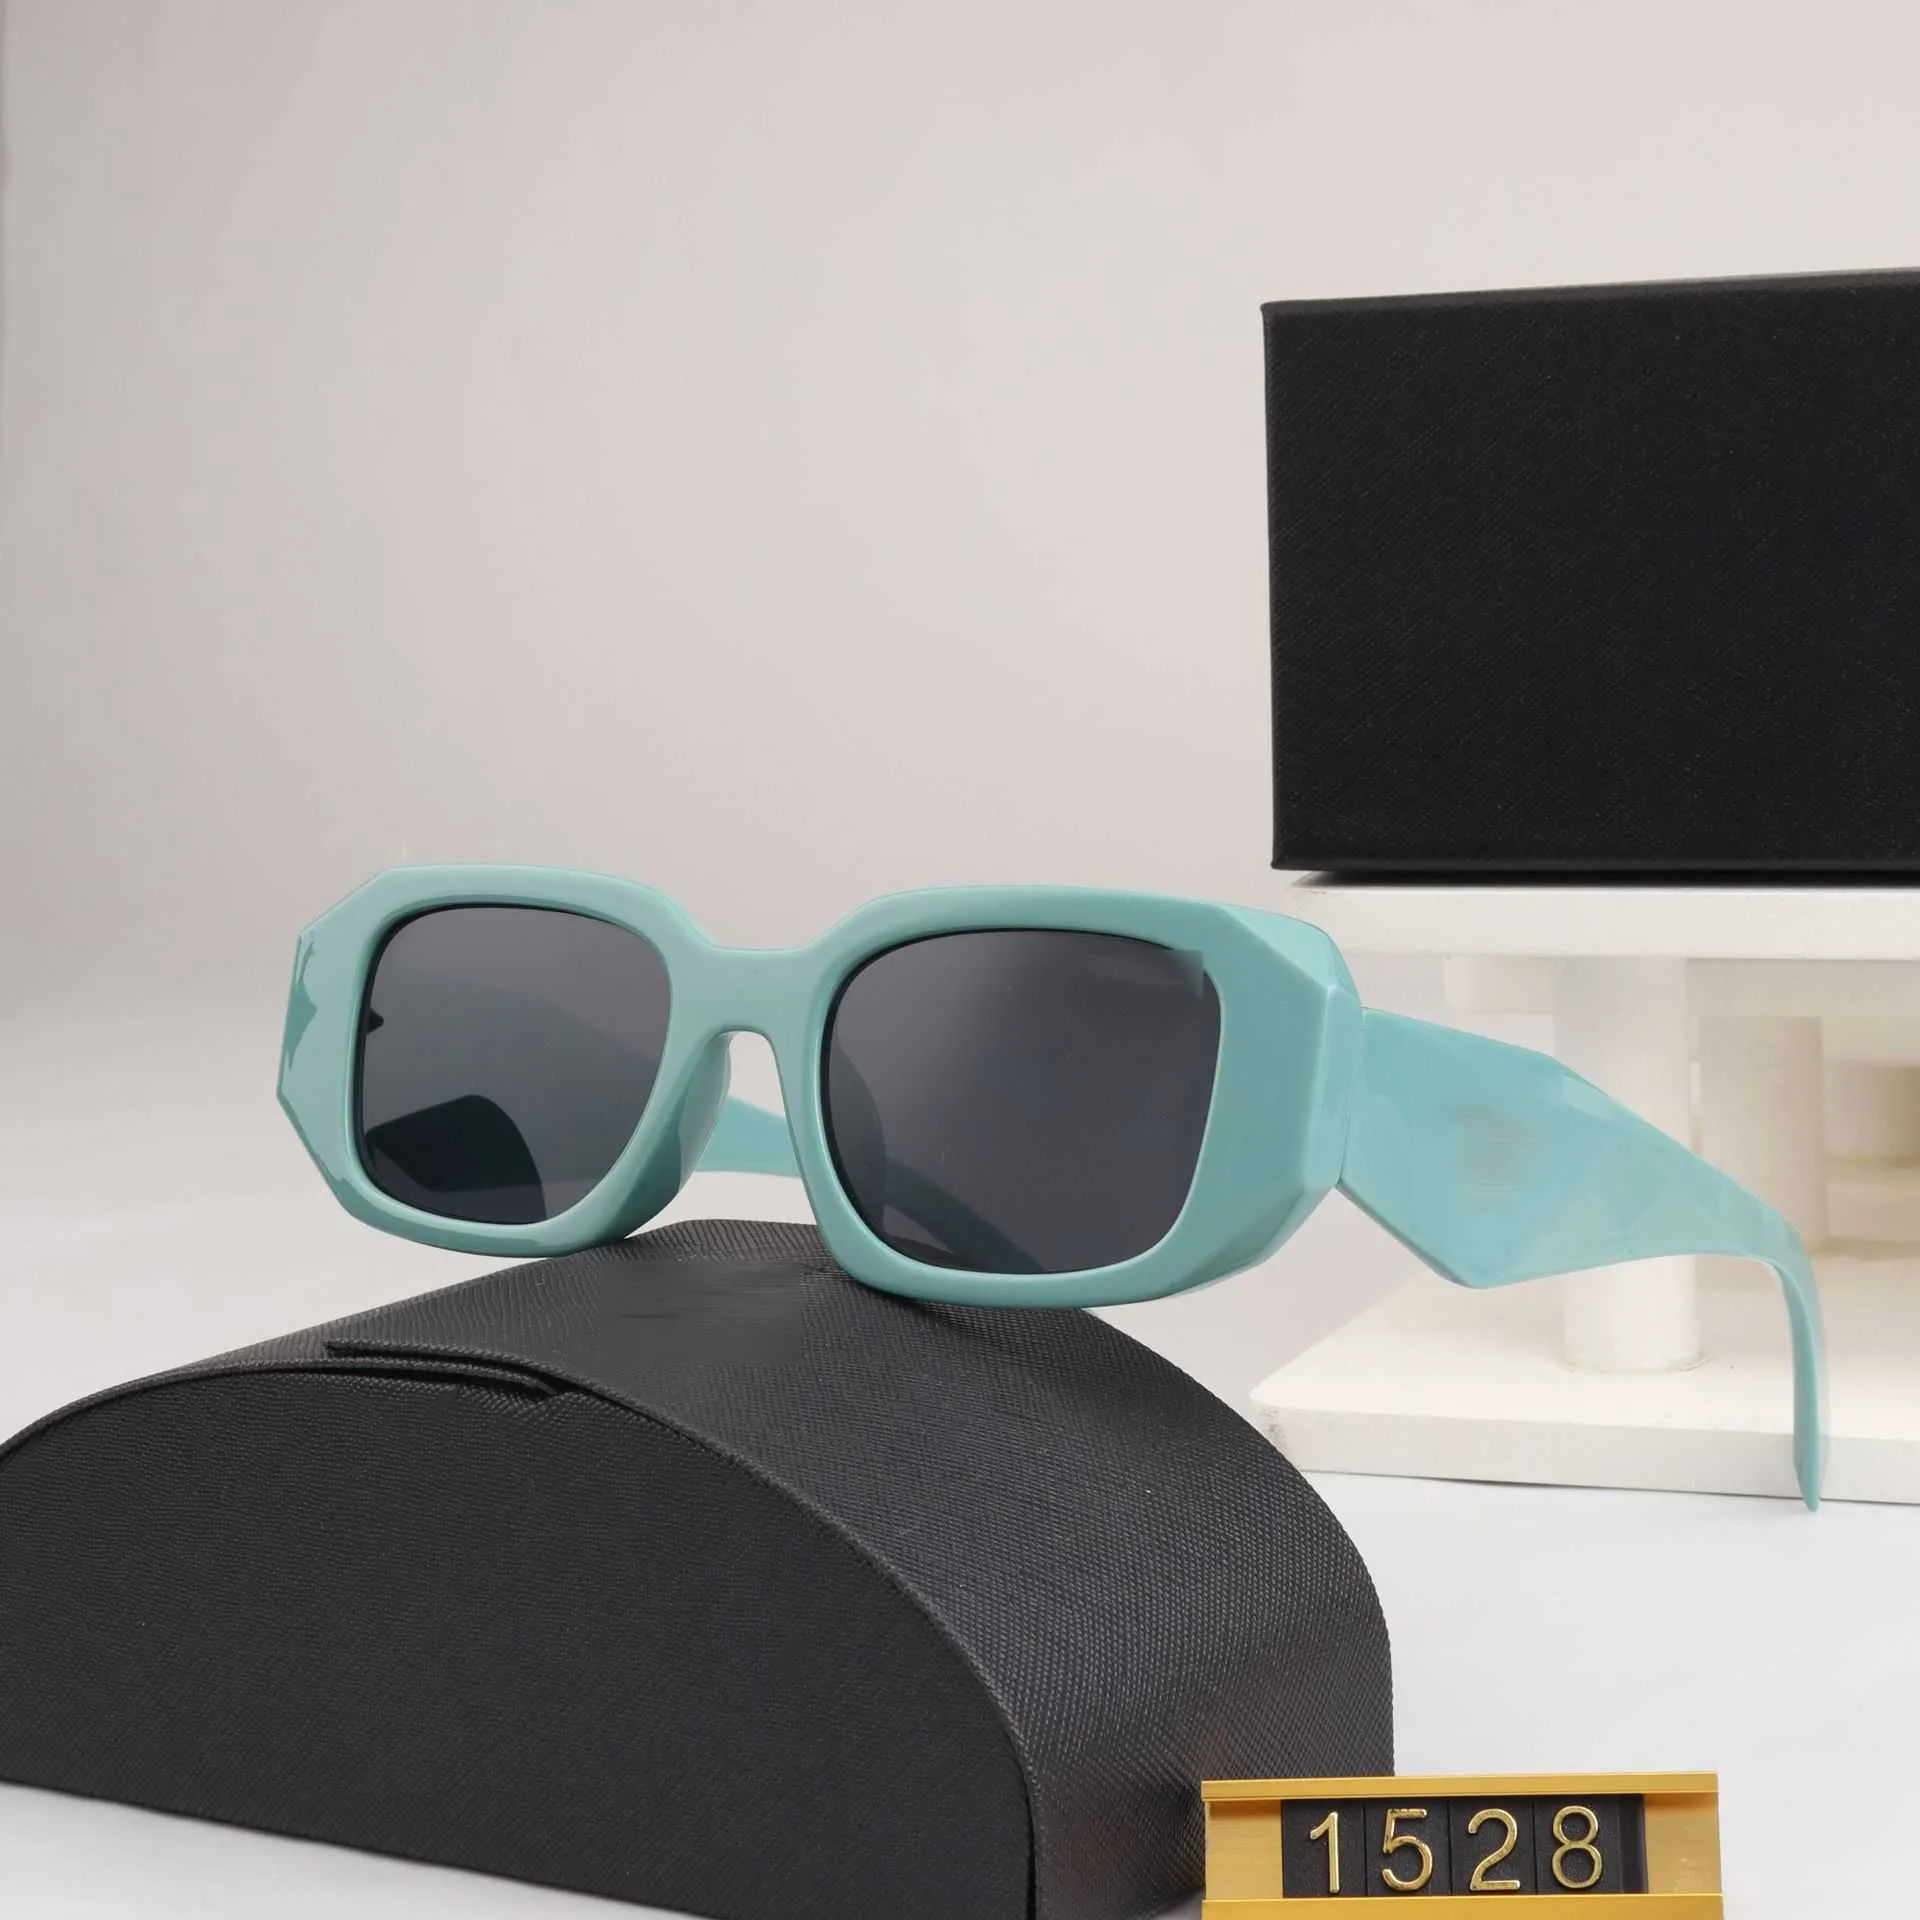 EOK 12 Red Polarized Sunglasses Foster Grant e/o Summer Discount Deal! |  eBay